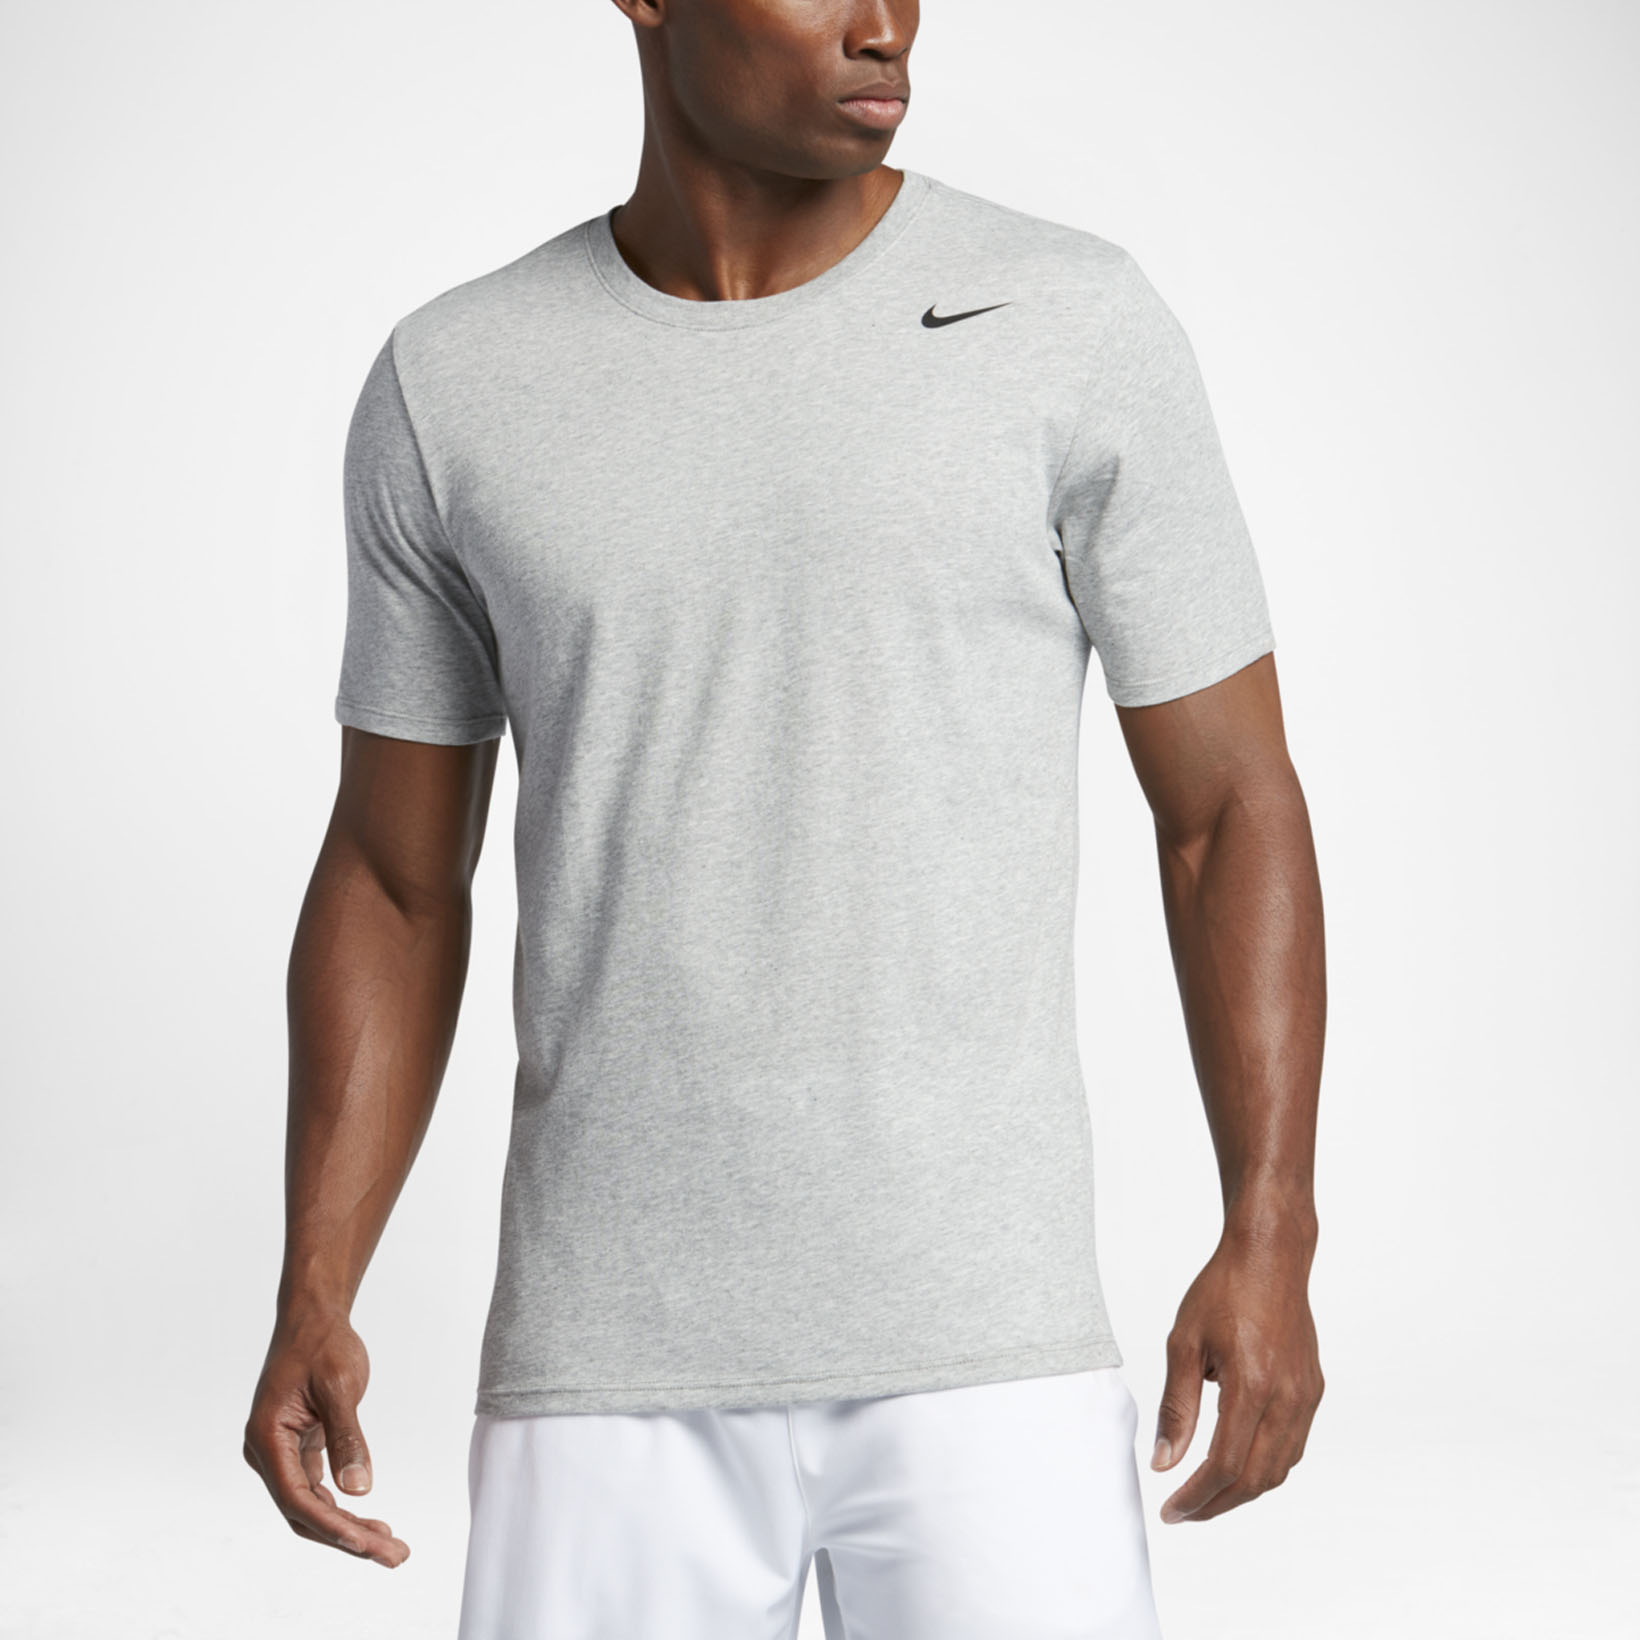 Мужская футболка Nike Dri-FIT Cotton Version 2.0 SS 706625-063